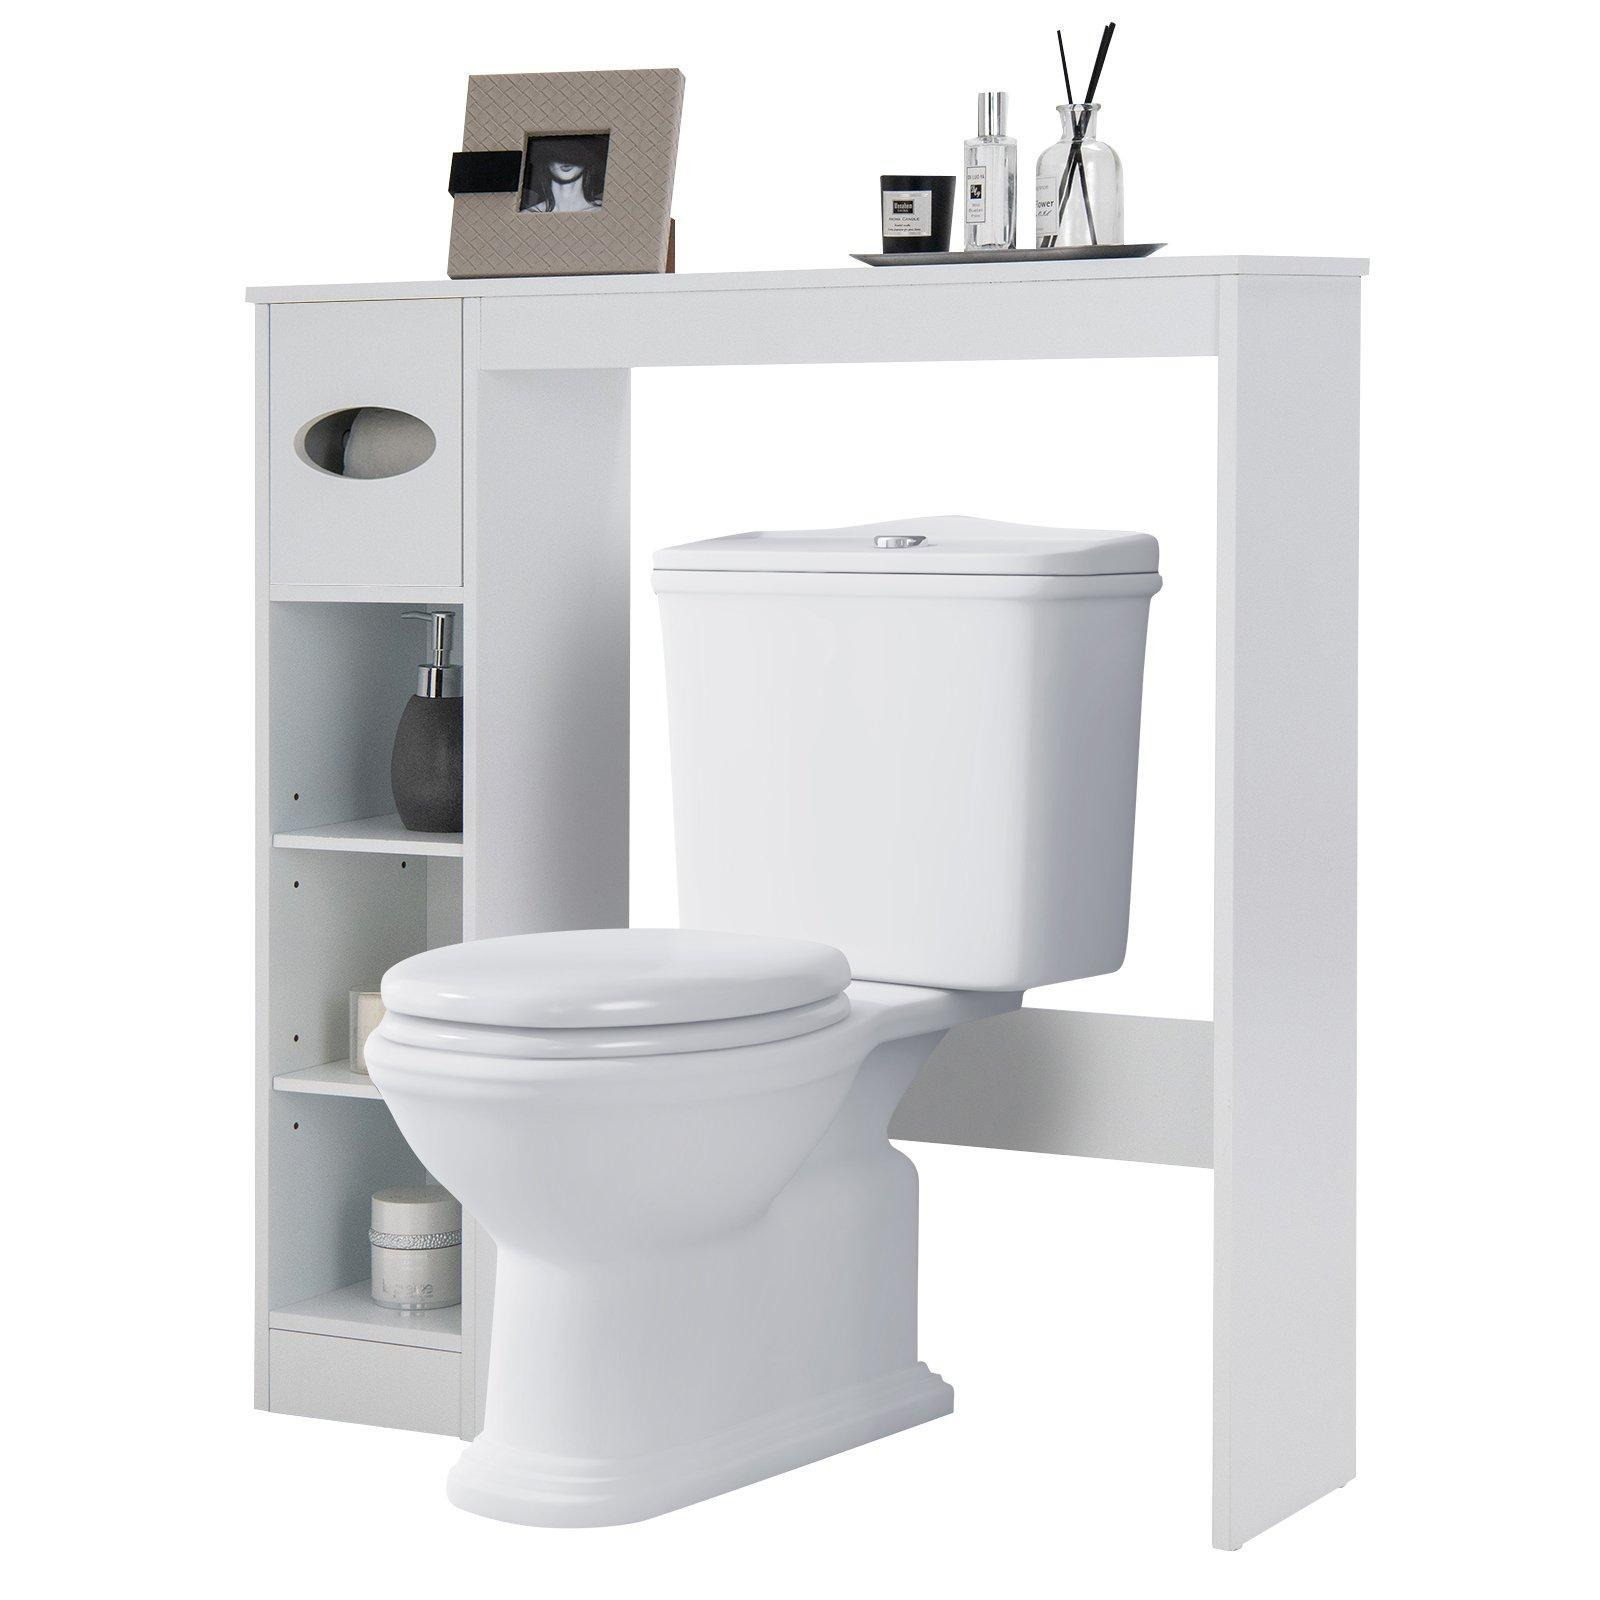 Bathroom Space Saver Multifunctional Storage Rack Home Organizer - image 1